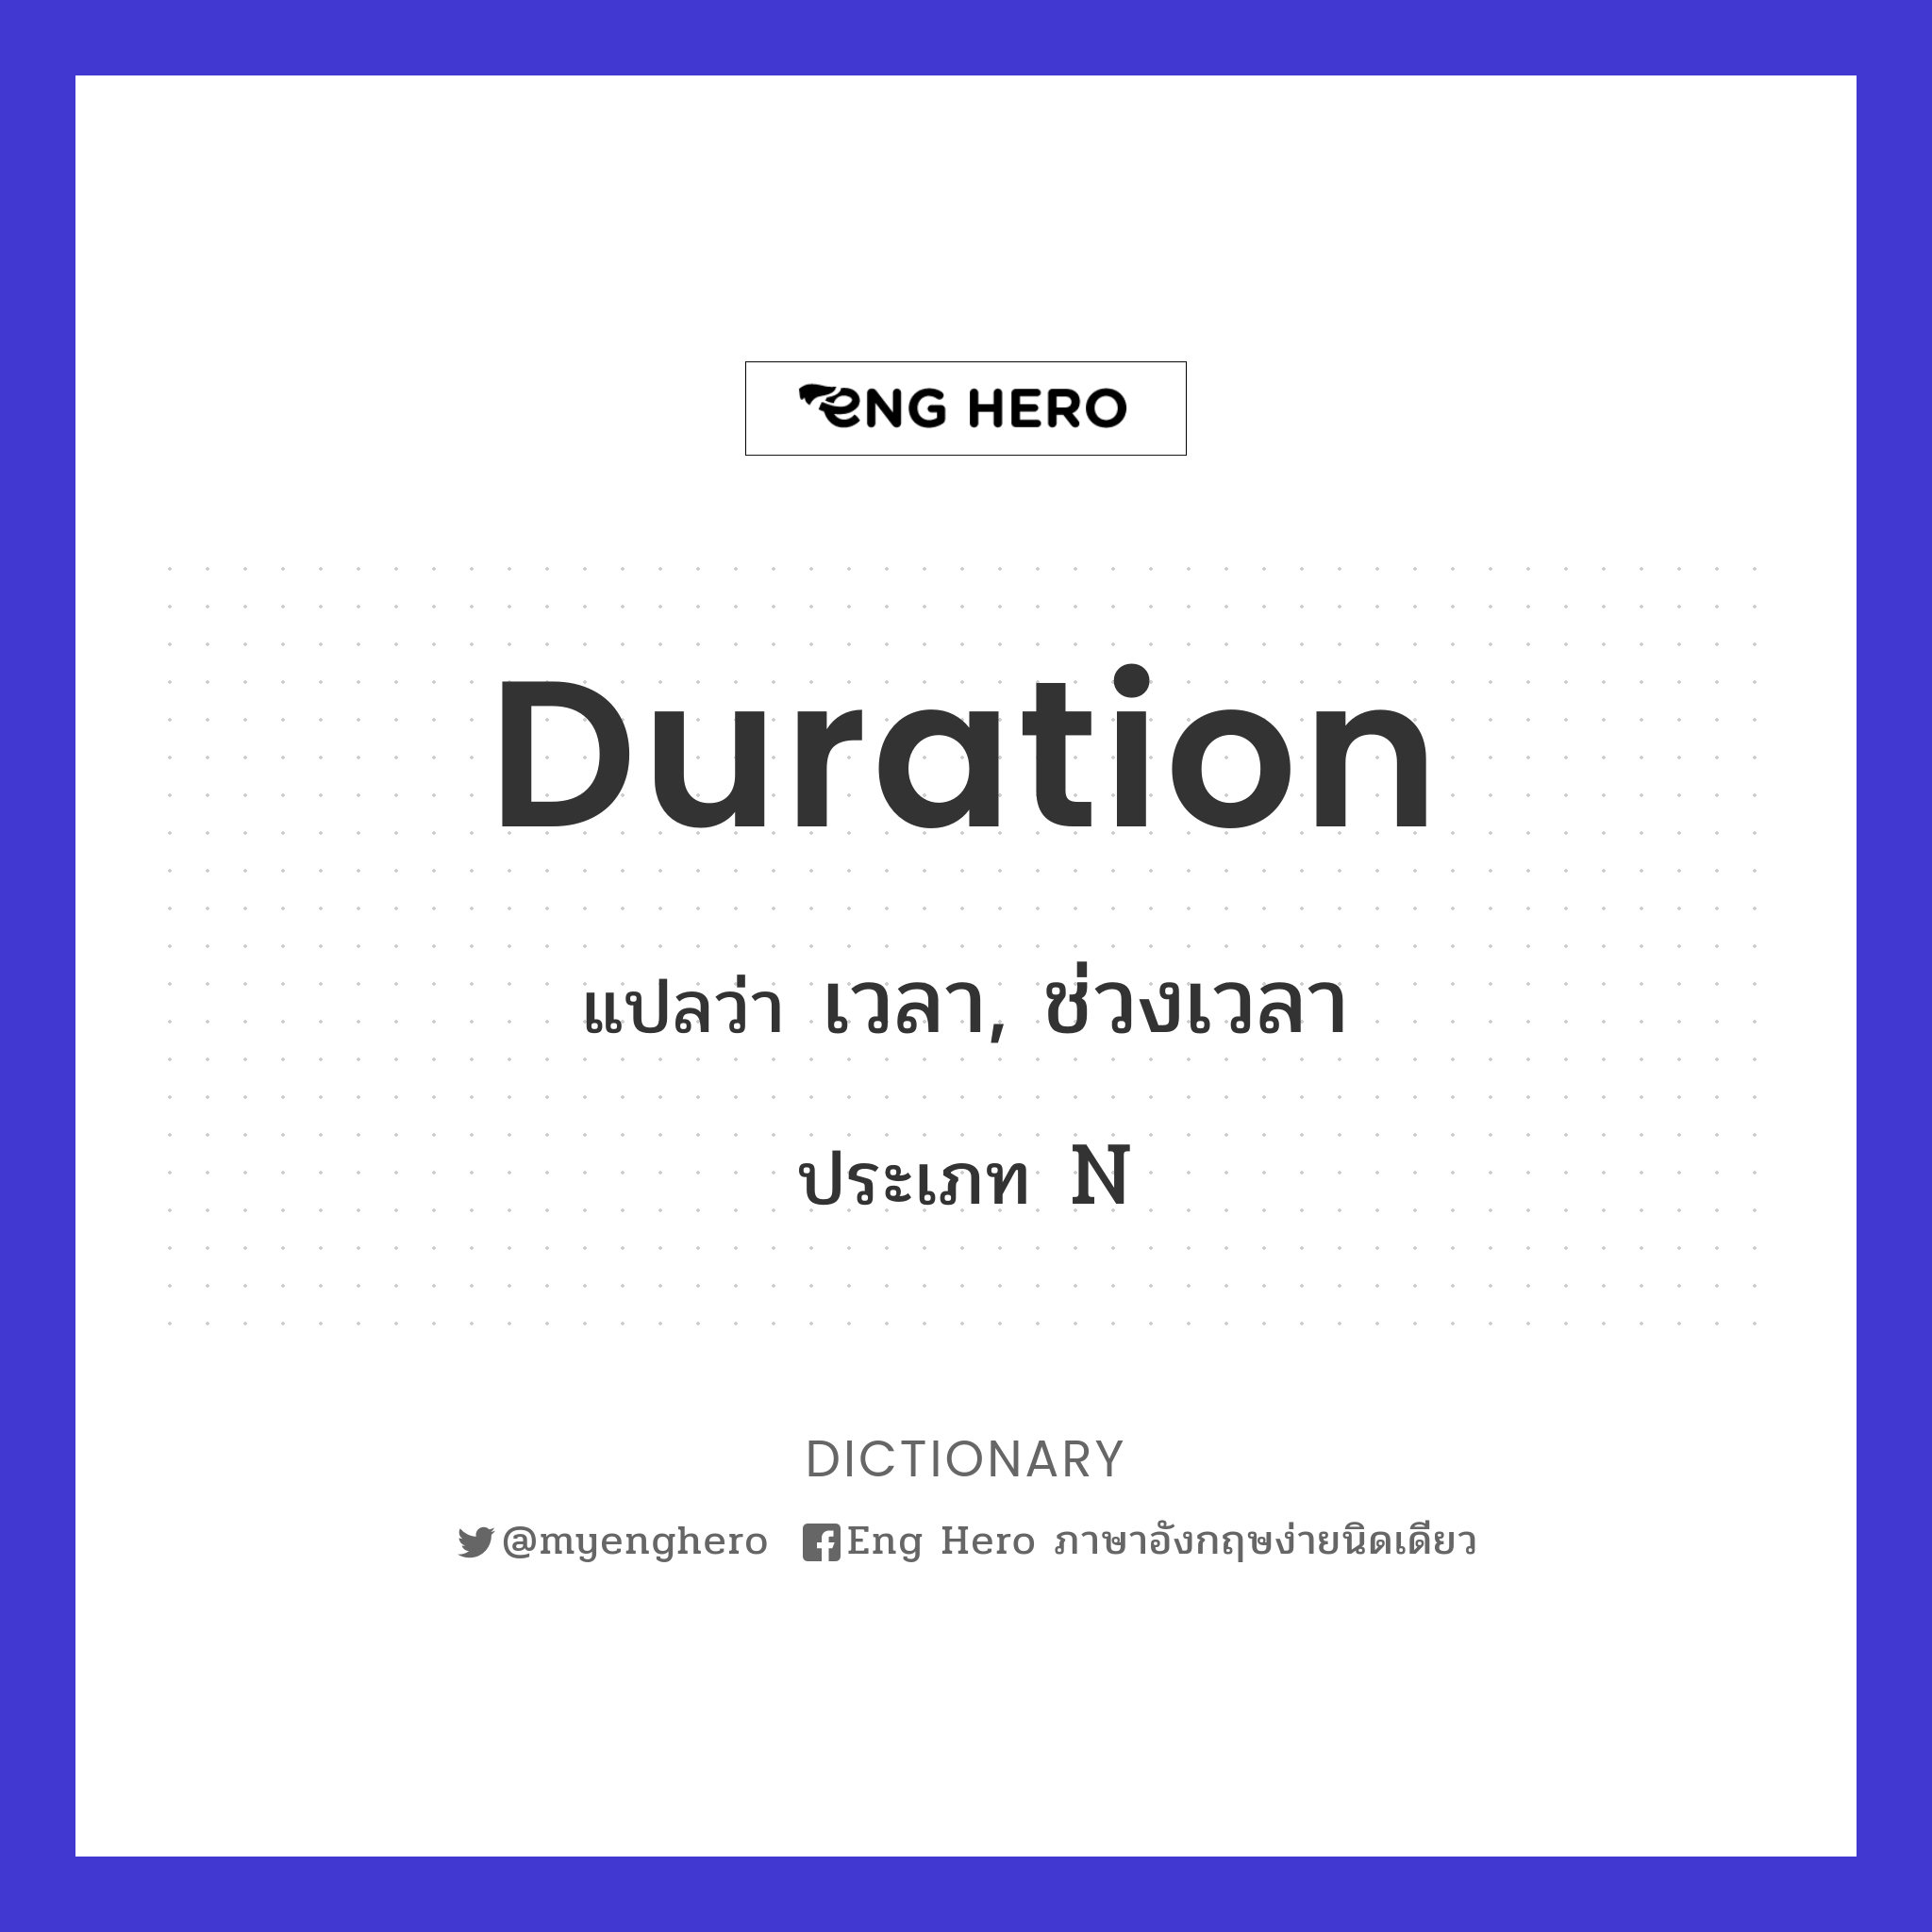 duration